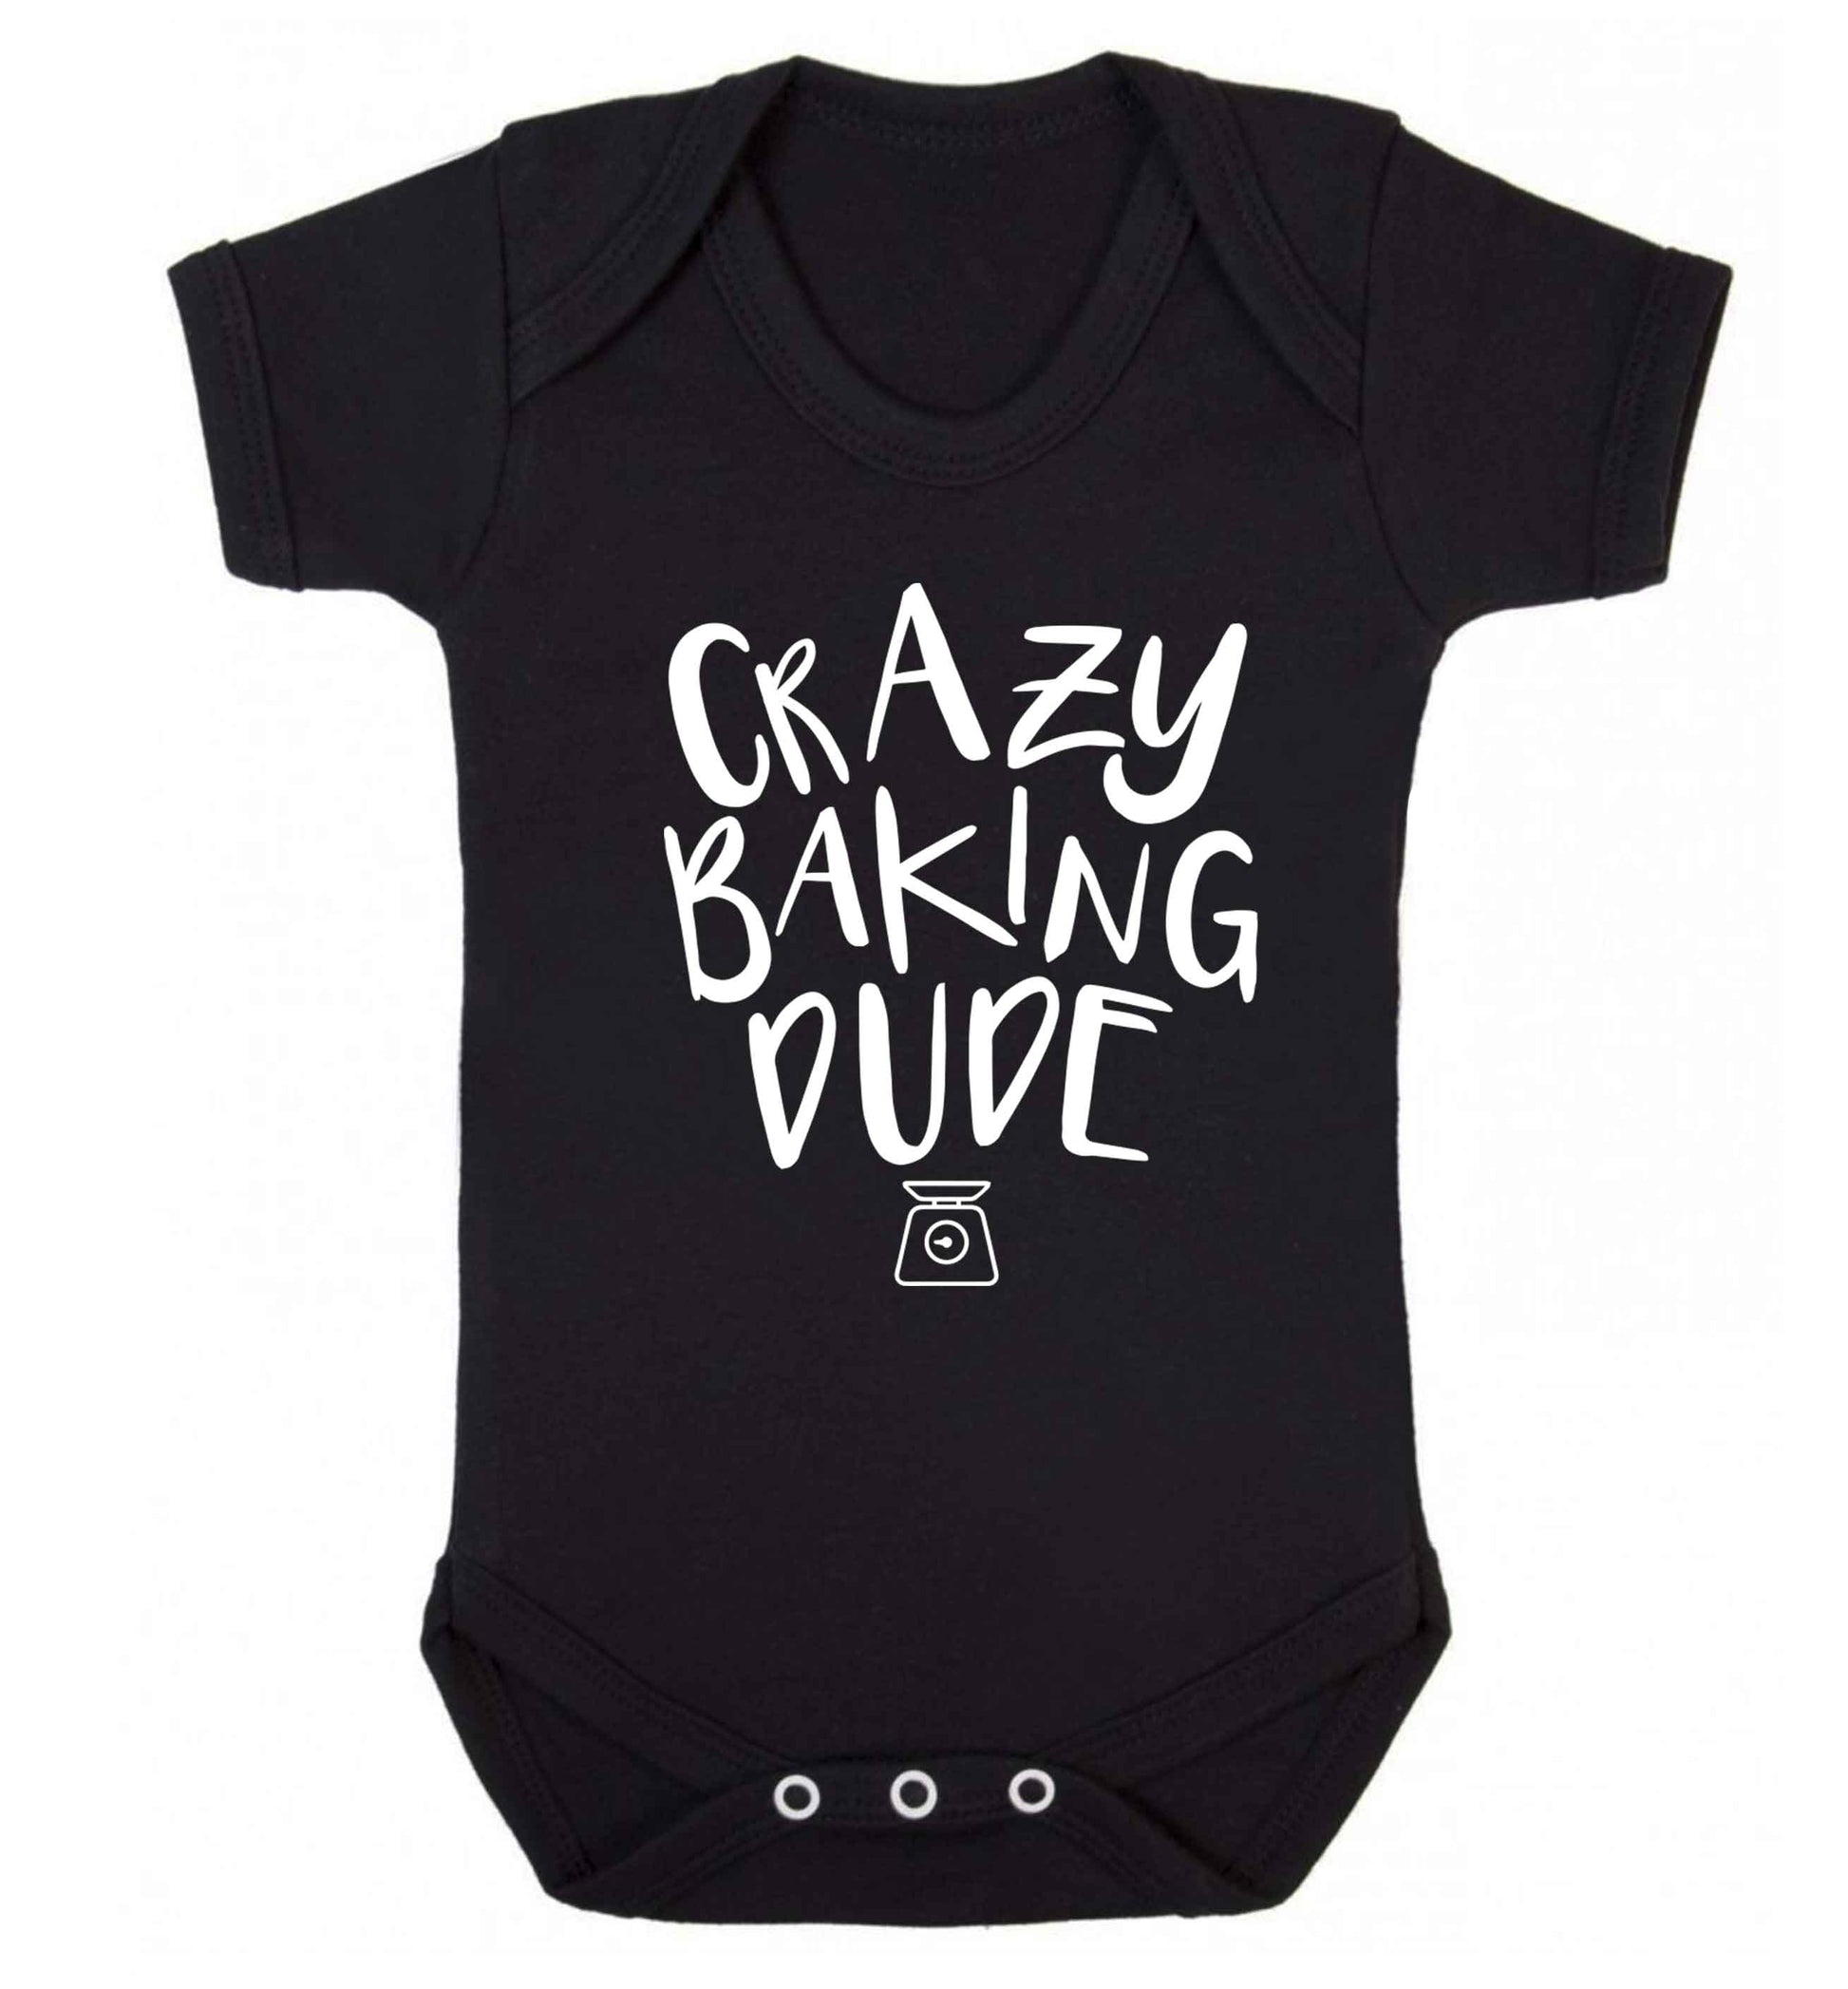 Crazy baking dude Baby Vest black 18-24 months